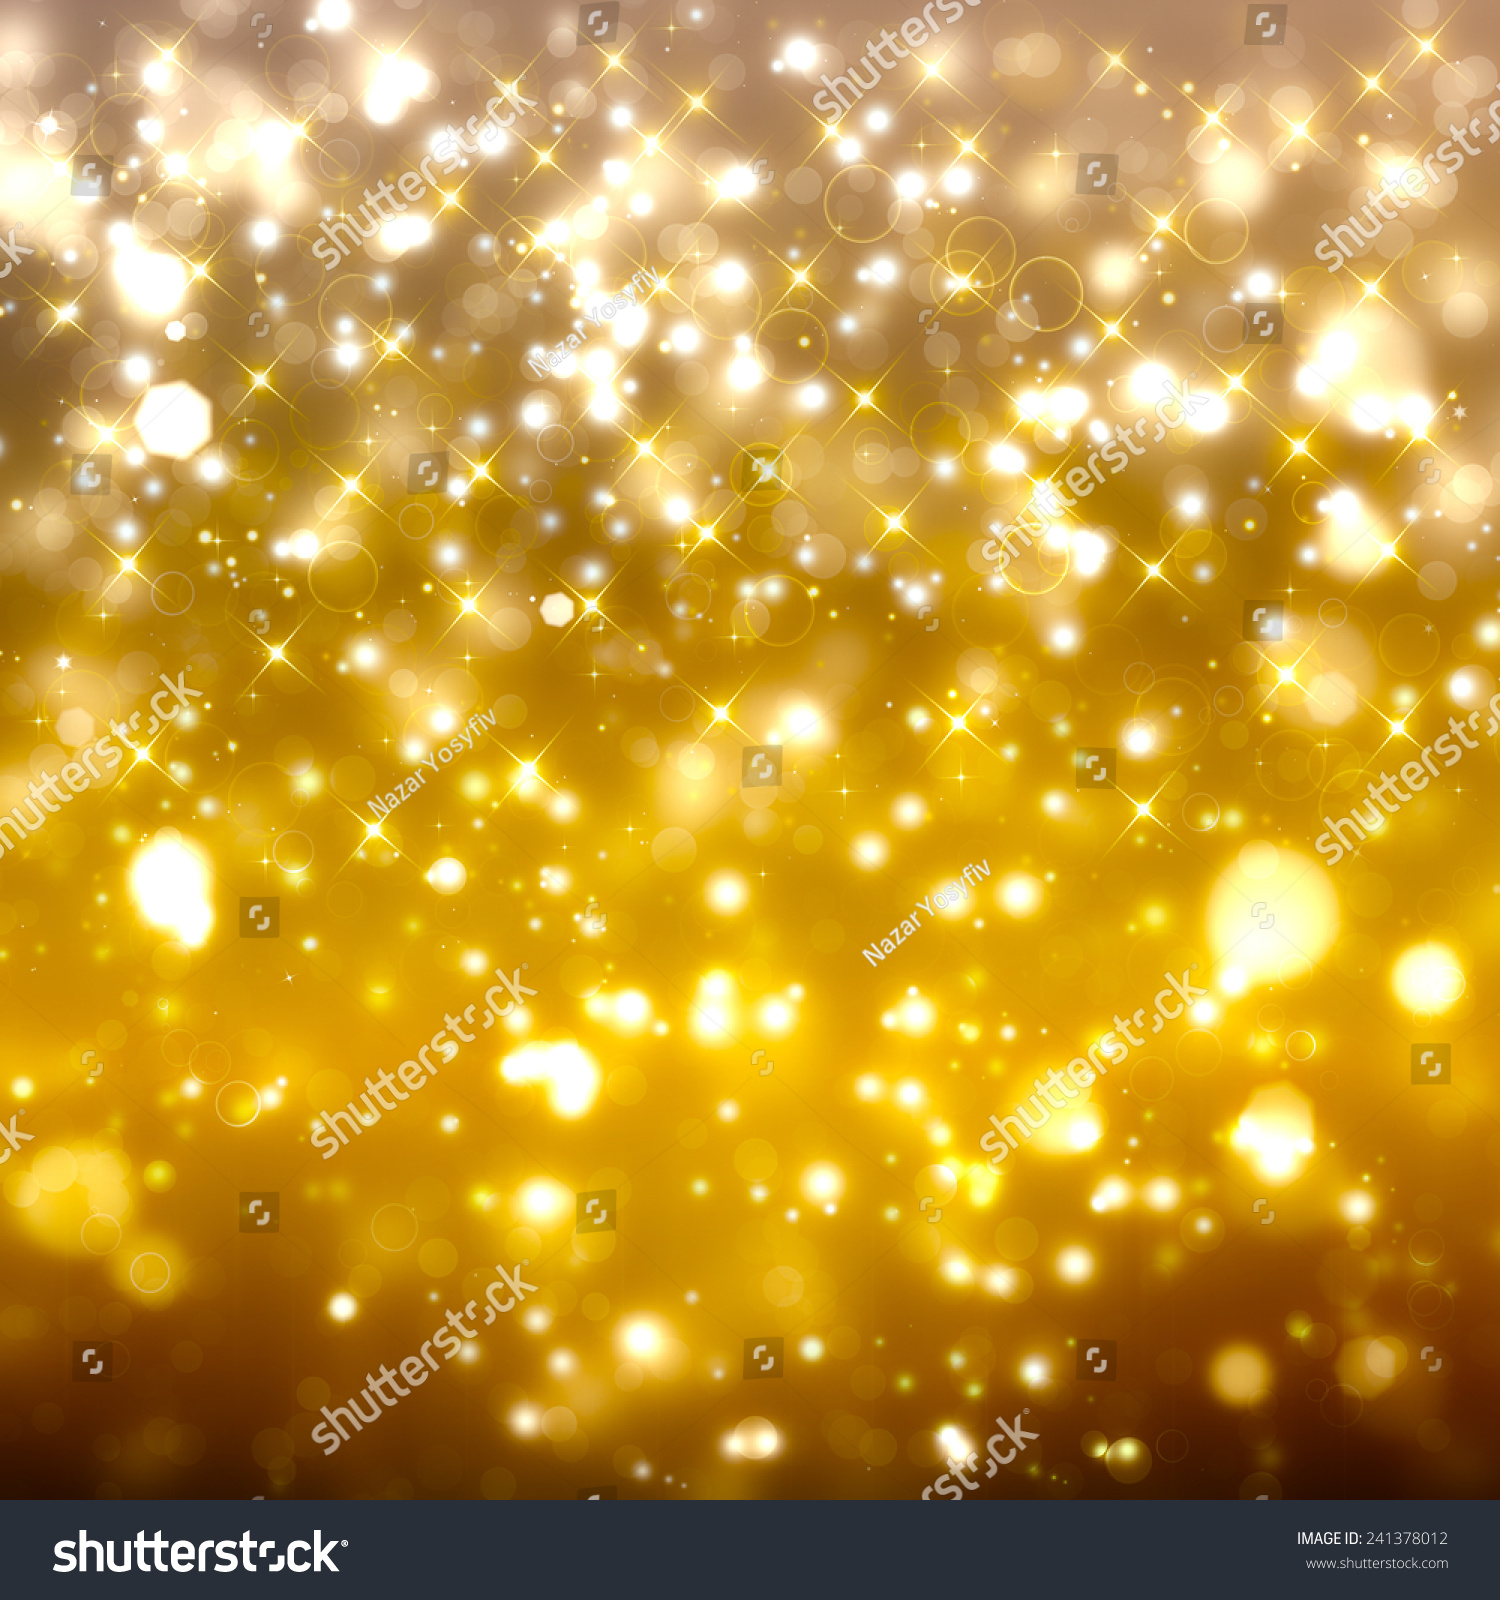 Glittery Golden Festive Background Stock Photo 241378012 : Shutterstock